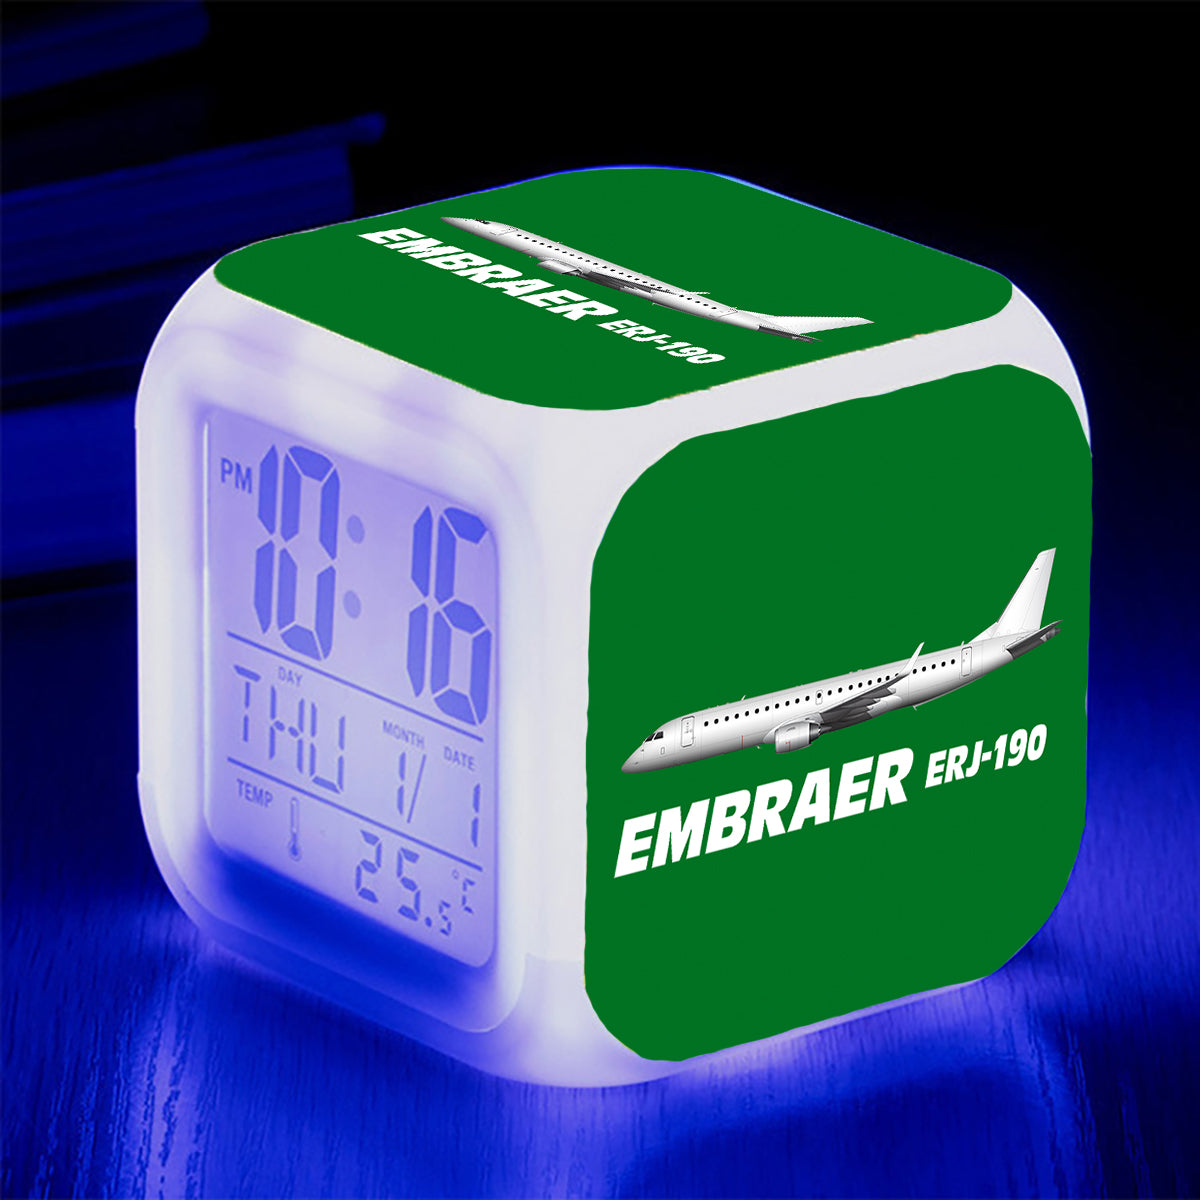 The Embraer ERJ-190 Designed "7 Colour" Digital Alarm Clock